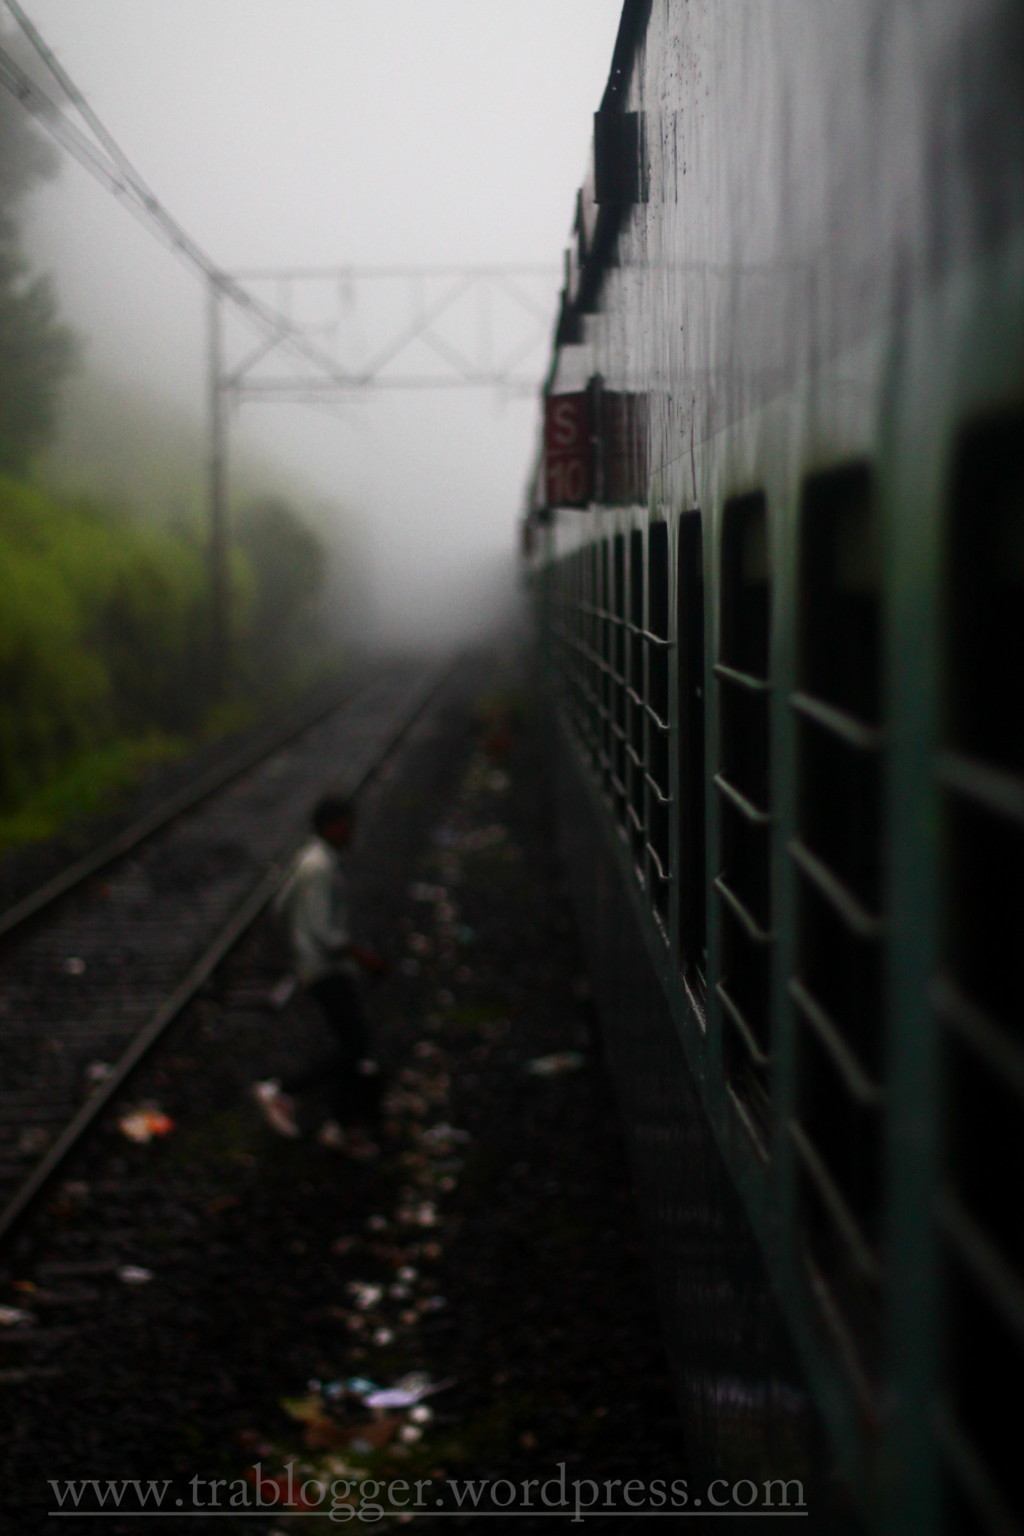 Railway journey essay